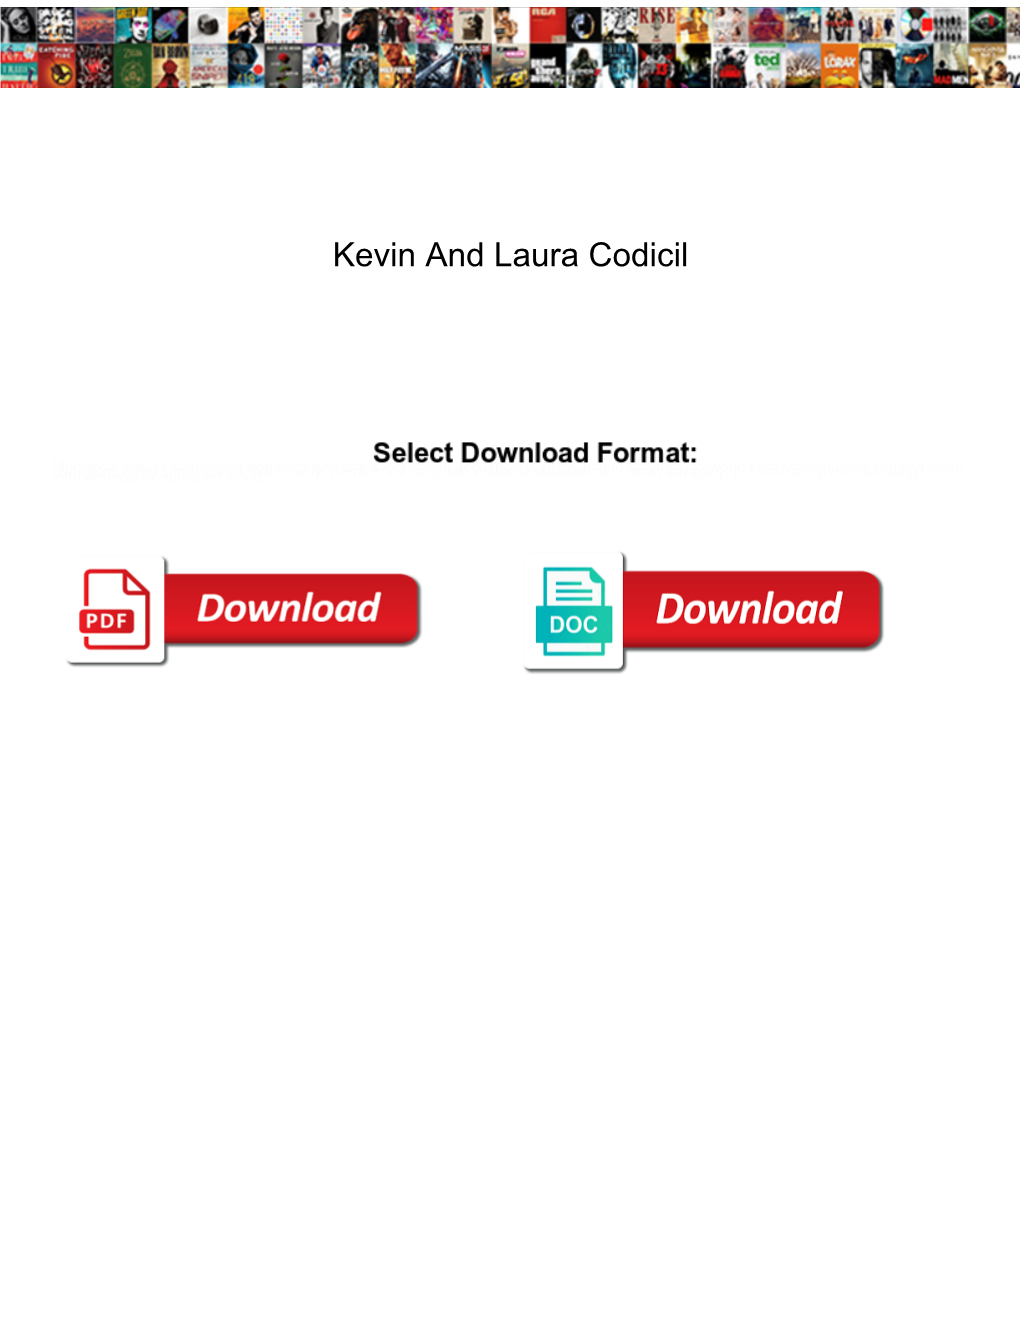 Kevin and Laura Codicil